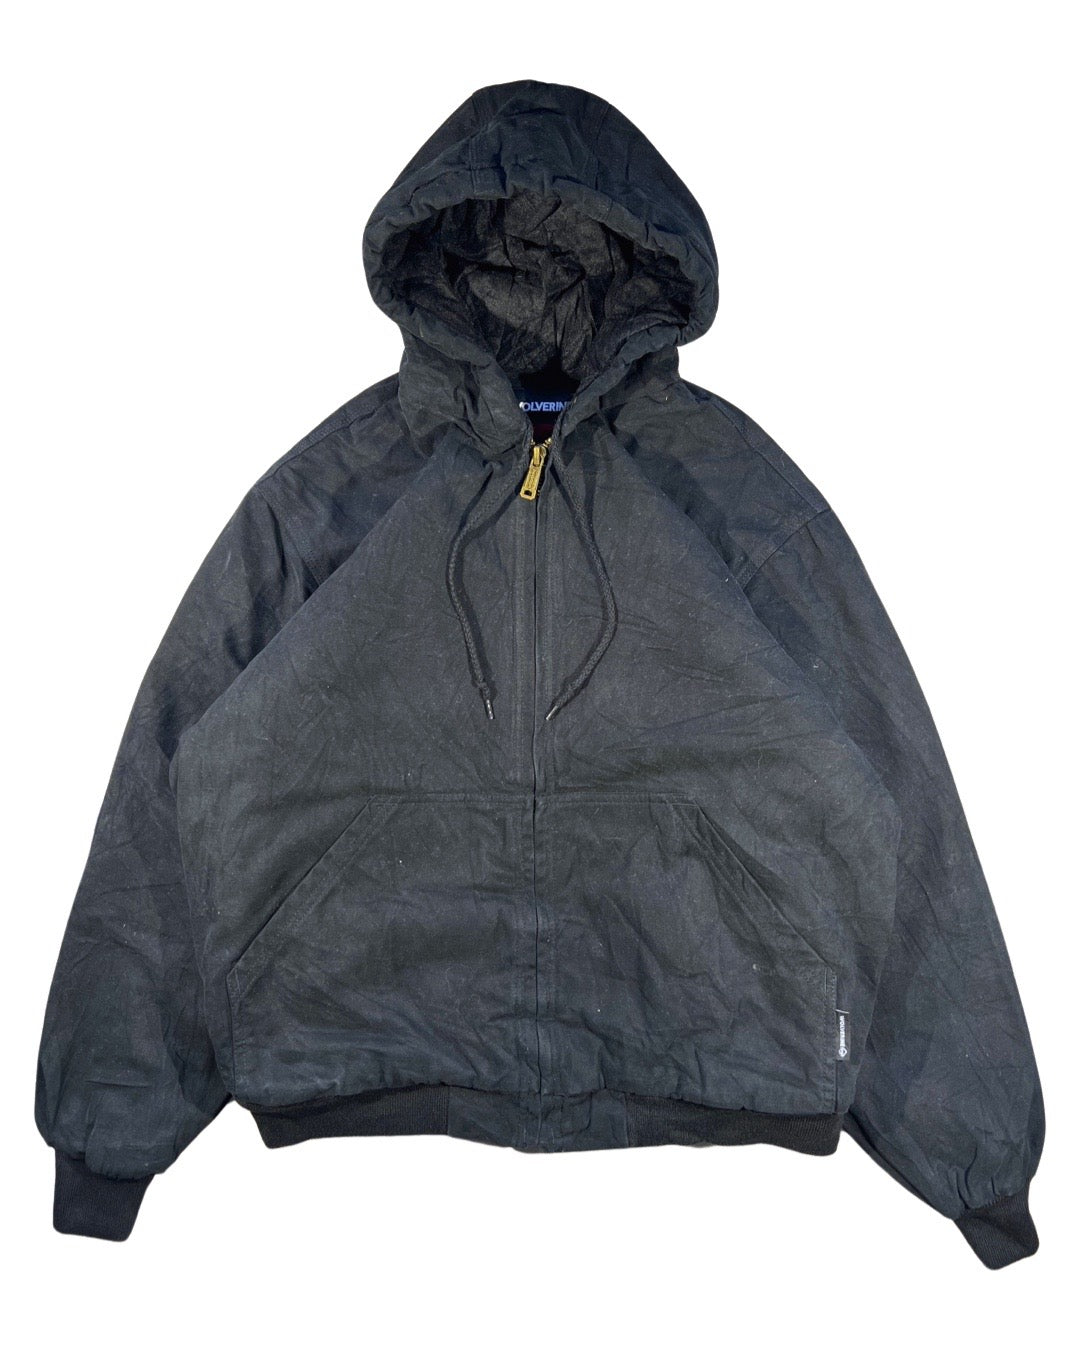 Vintage Hooded Work Jacket - L